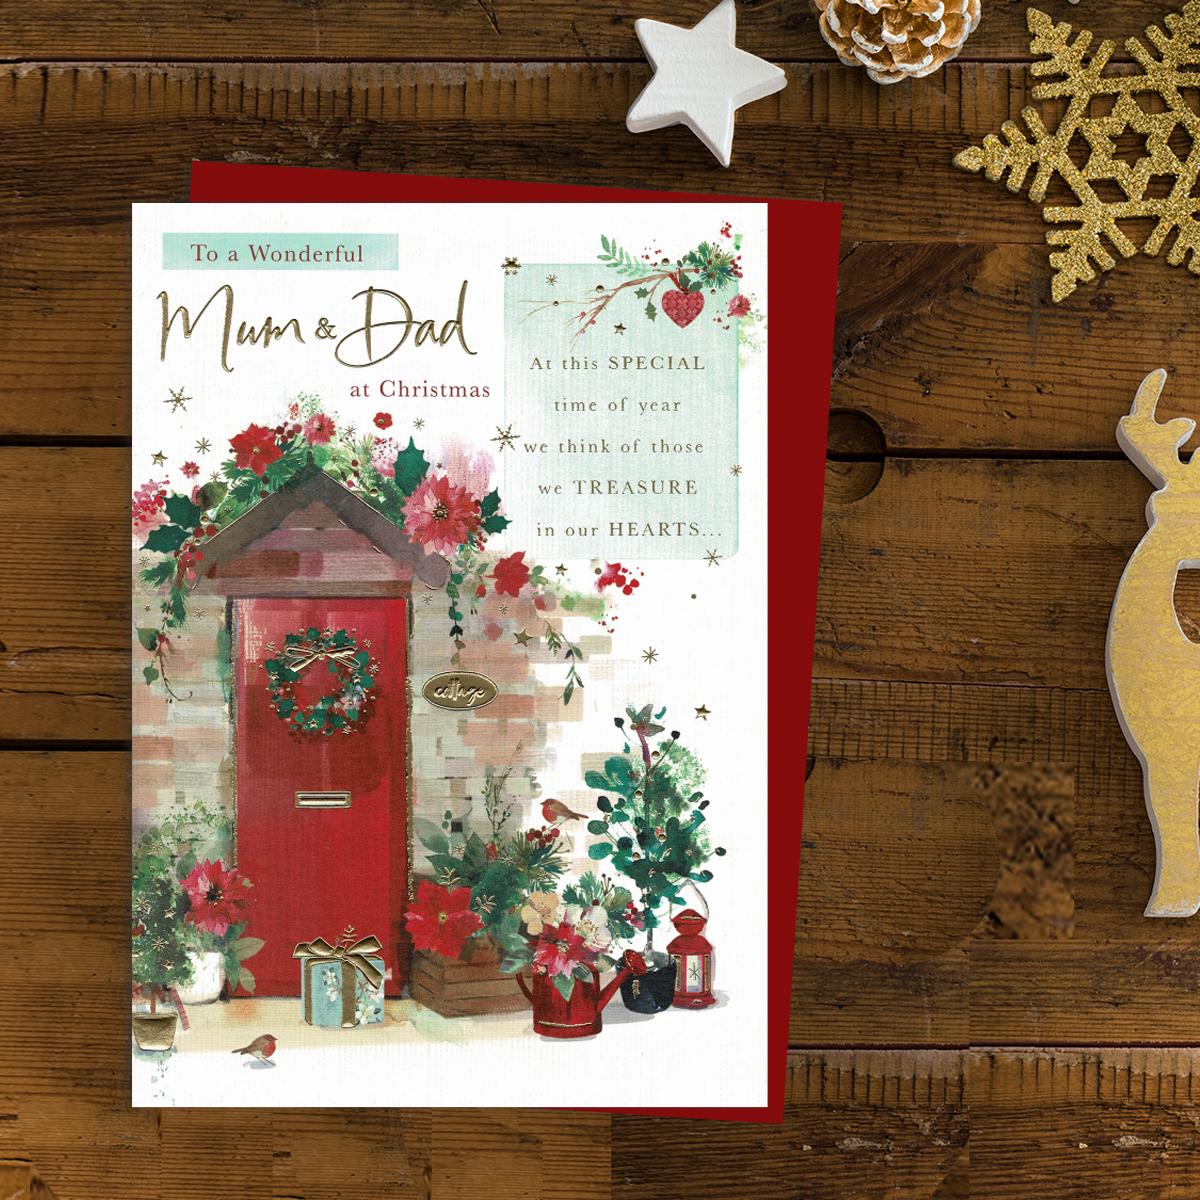 Wonderful Mum And Dad Christmas Card Alongside Its Red Envelope